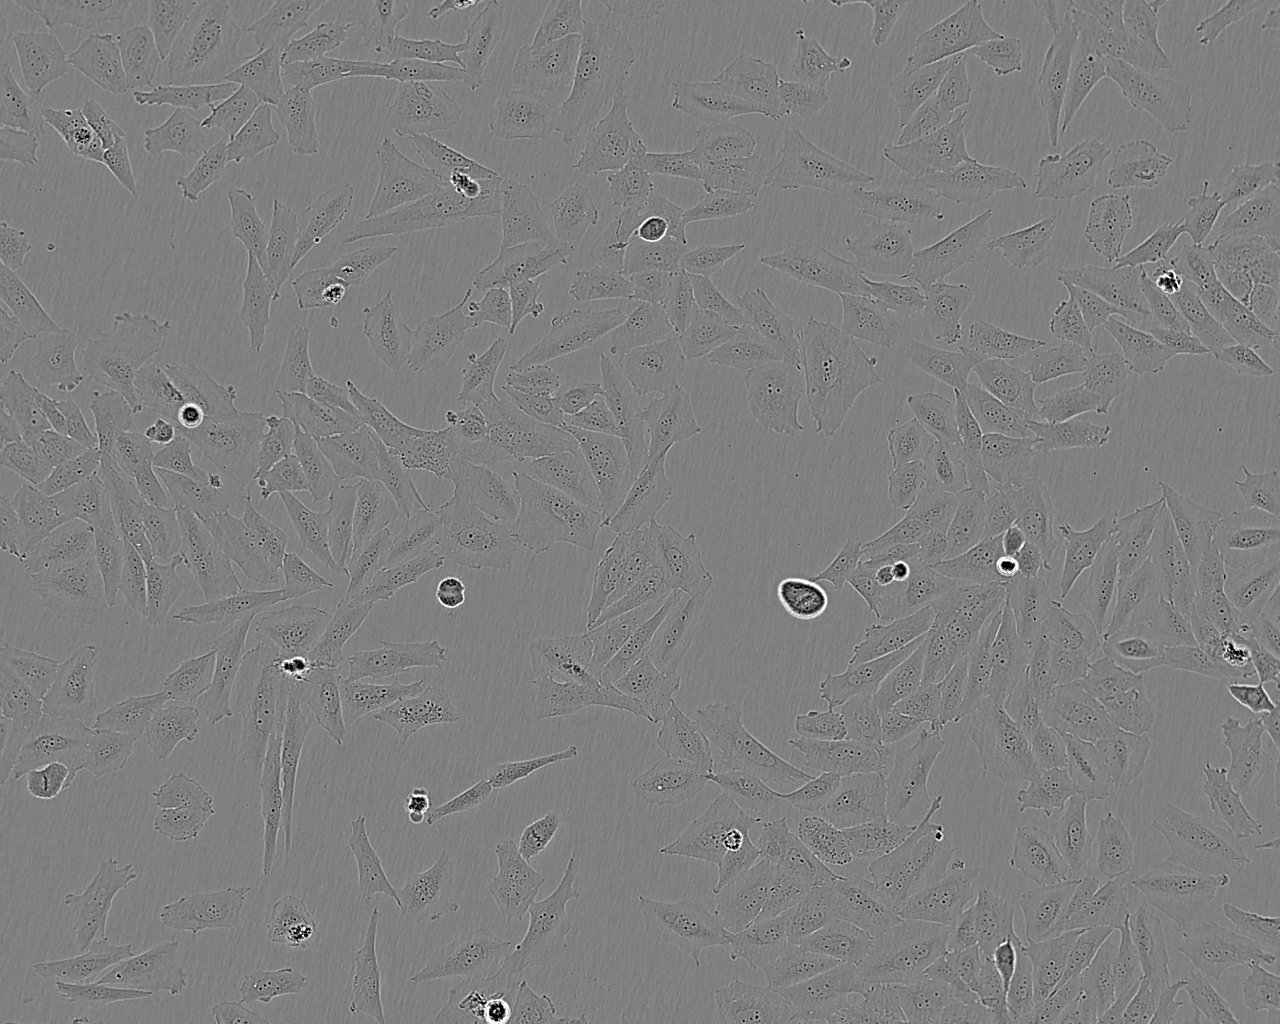 LLC-PK1 epithelioid cells猪肾细胞系,LLC-PK1 epithelioid cells